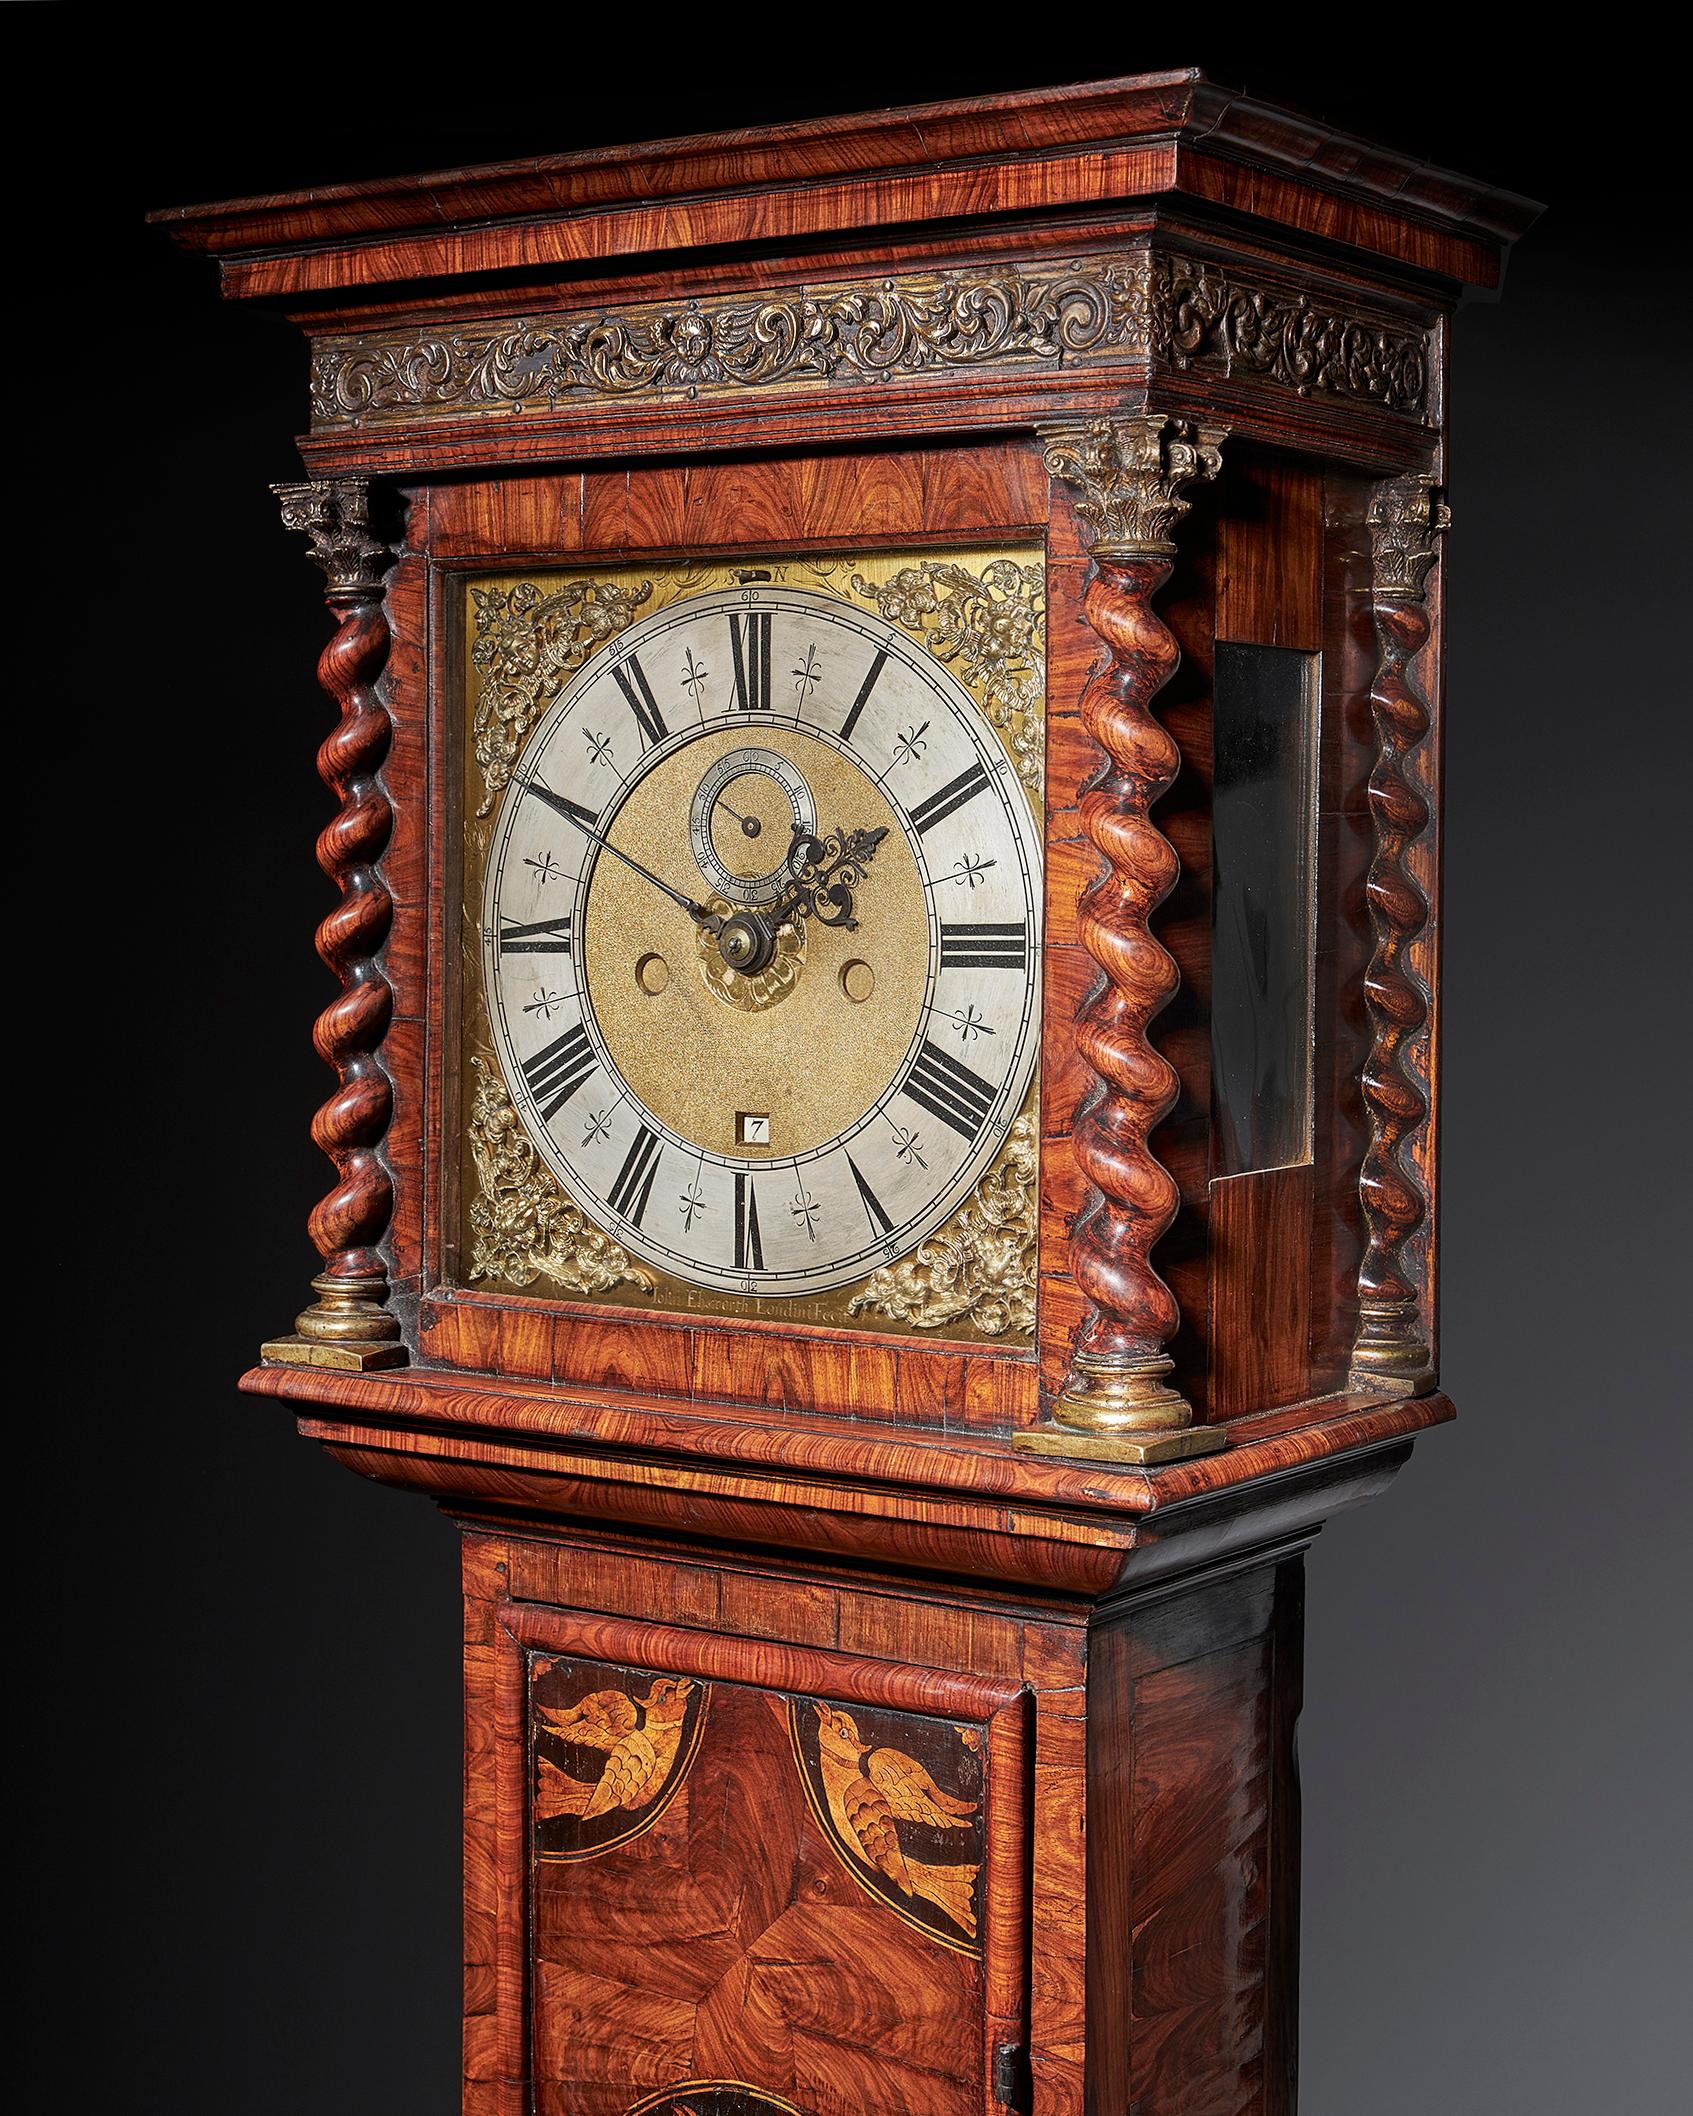 17th century grandfather clock